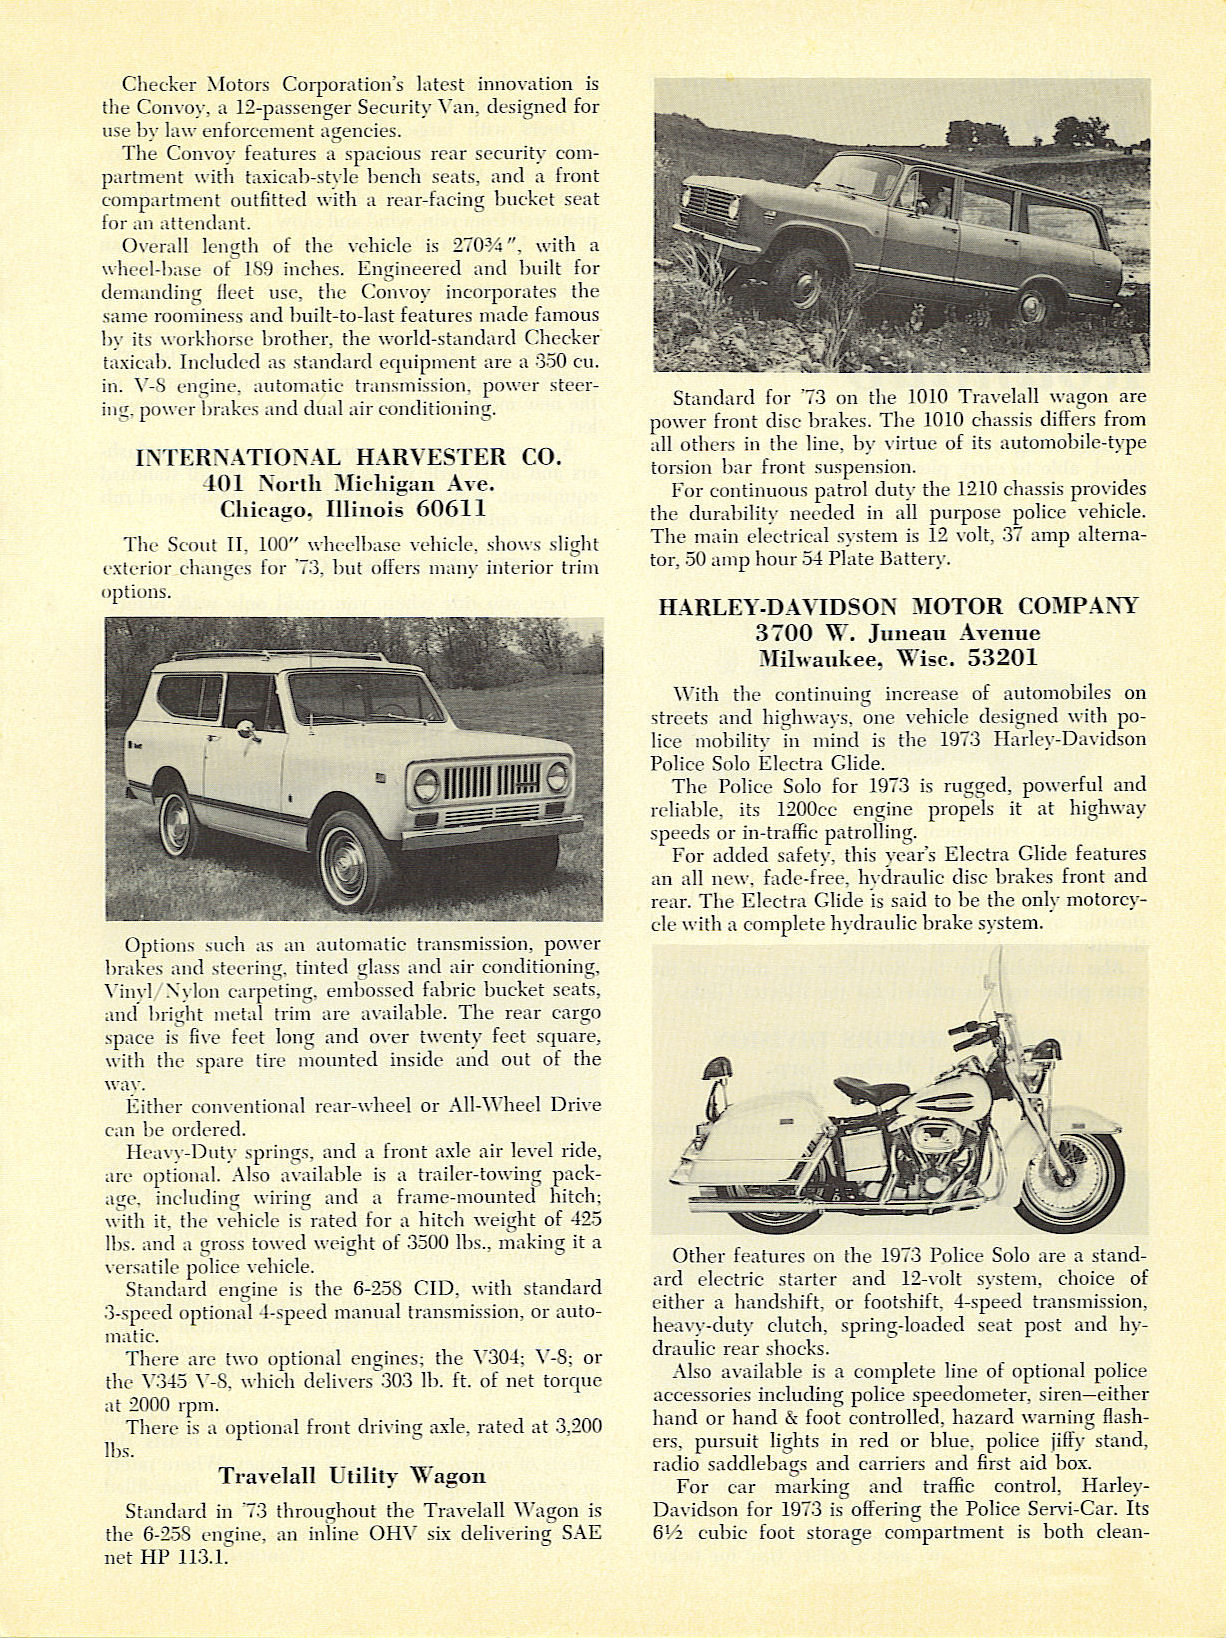 1973 Police Vehicles-07